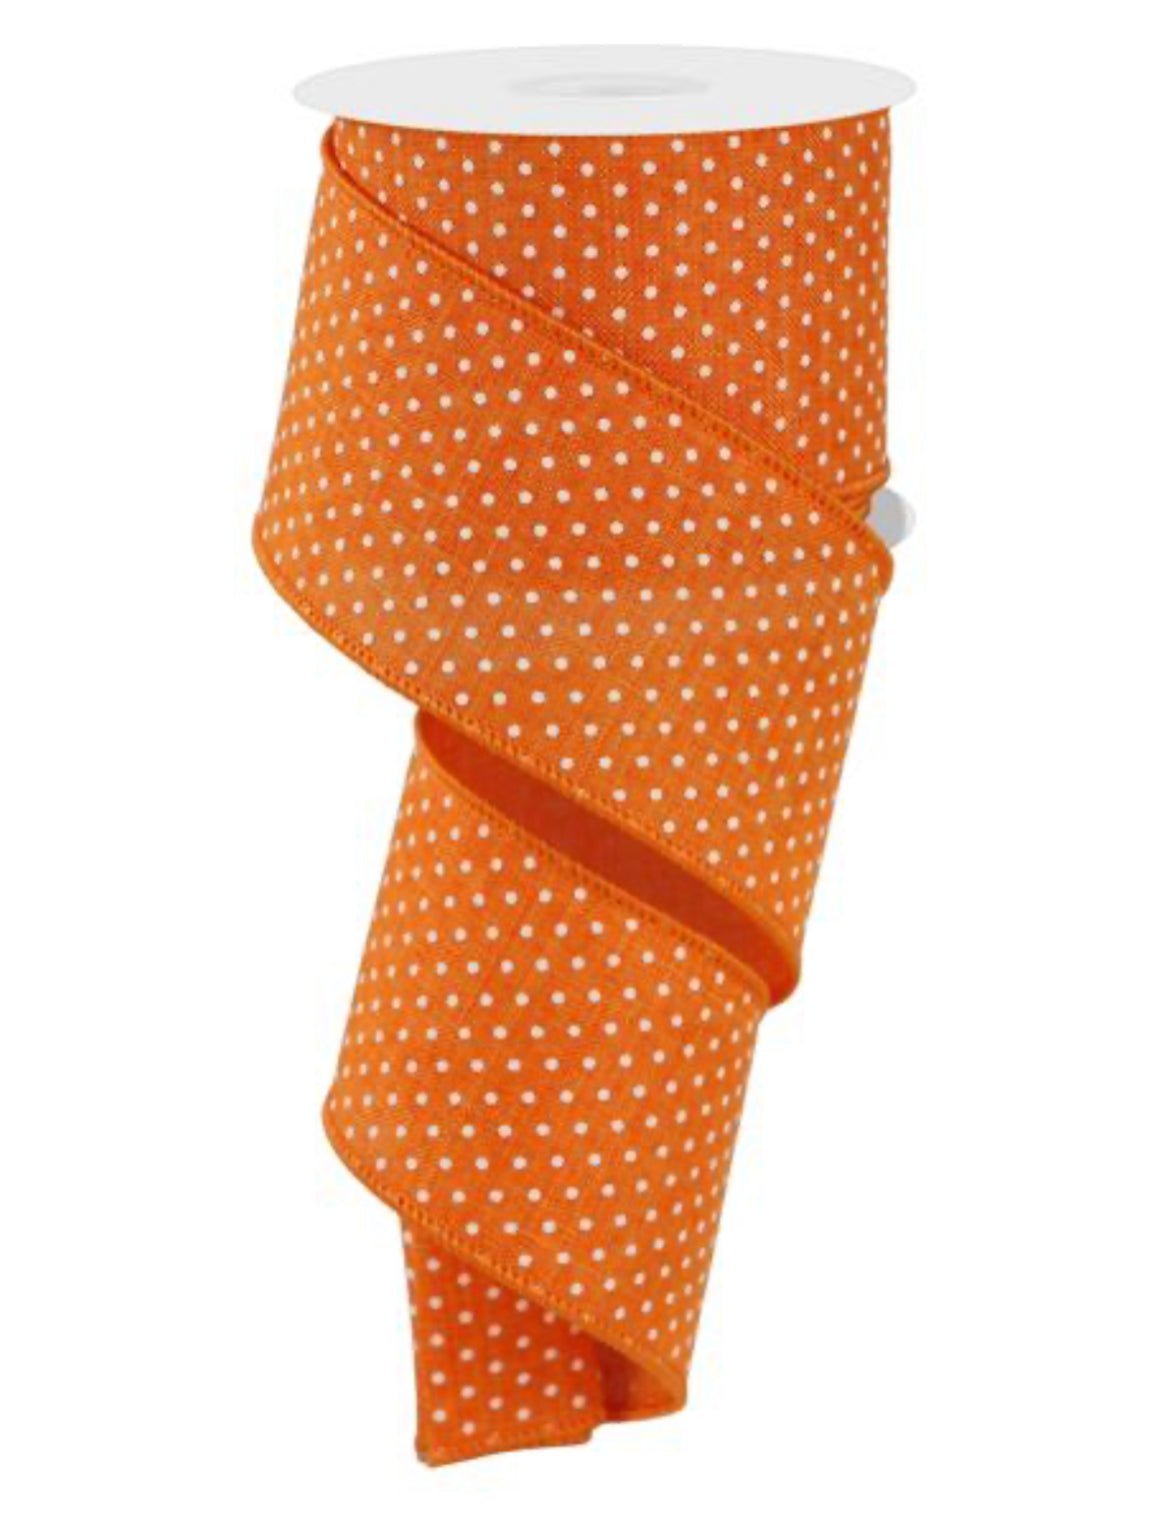 Orange and white Swiss dots on royal 2.5” - Greenery MarketWired ribbonRG01652HW